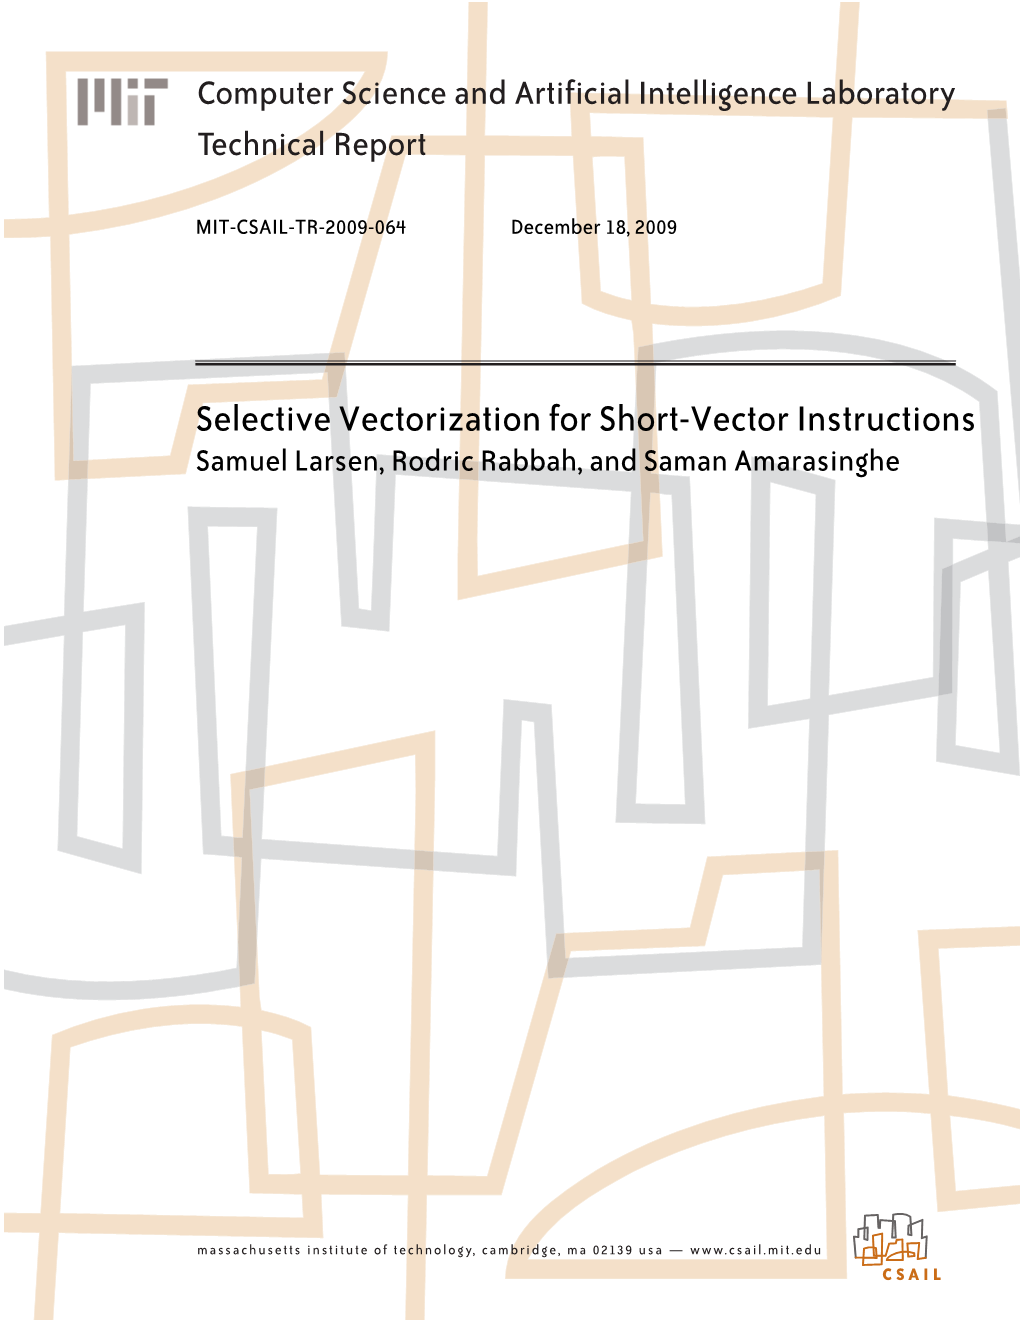 Selective Vectorization for Short-Vector Instructions Samuel Larsen, Rodric Rabbah, and Saman Amarasinghe